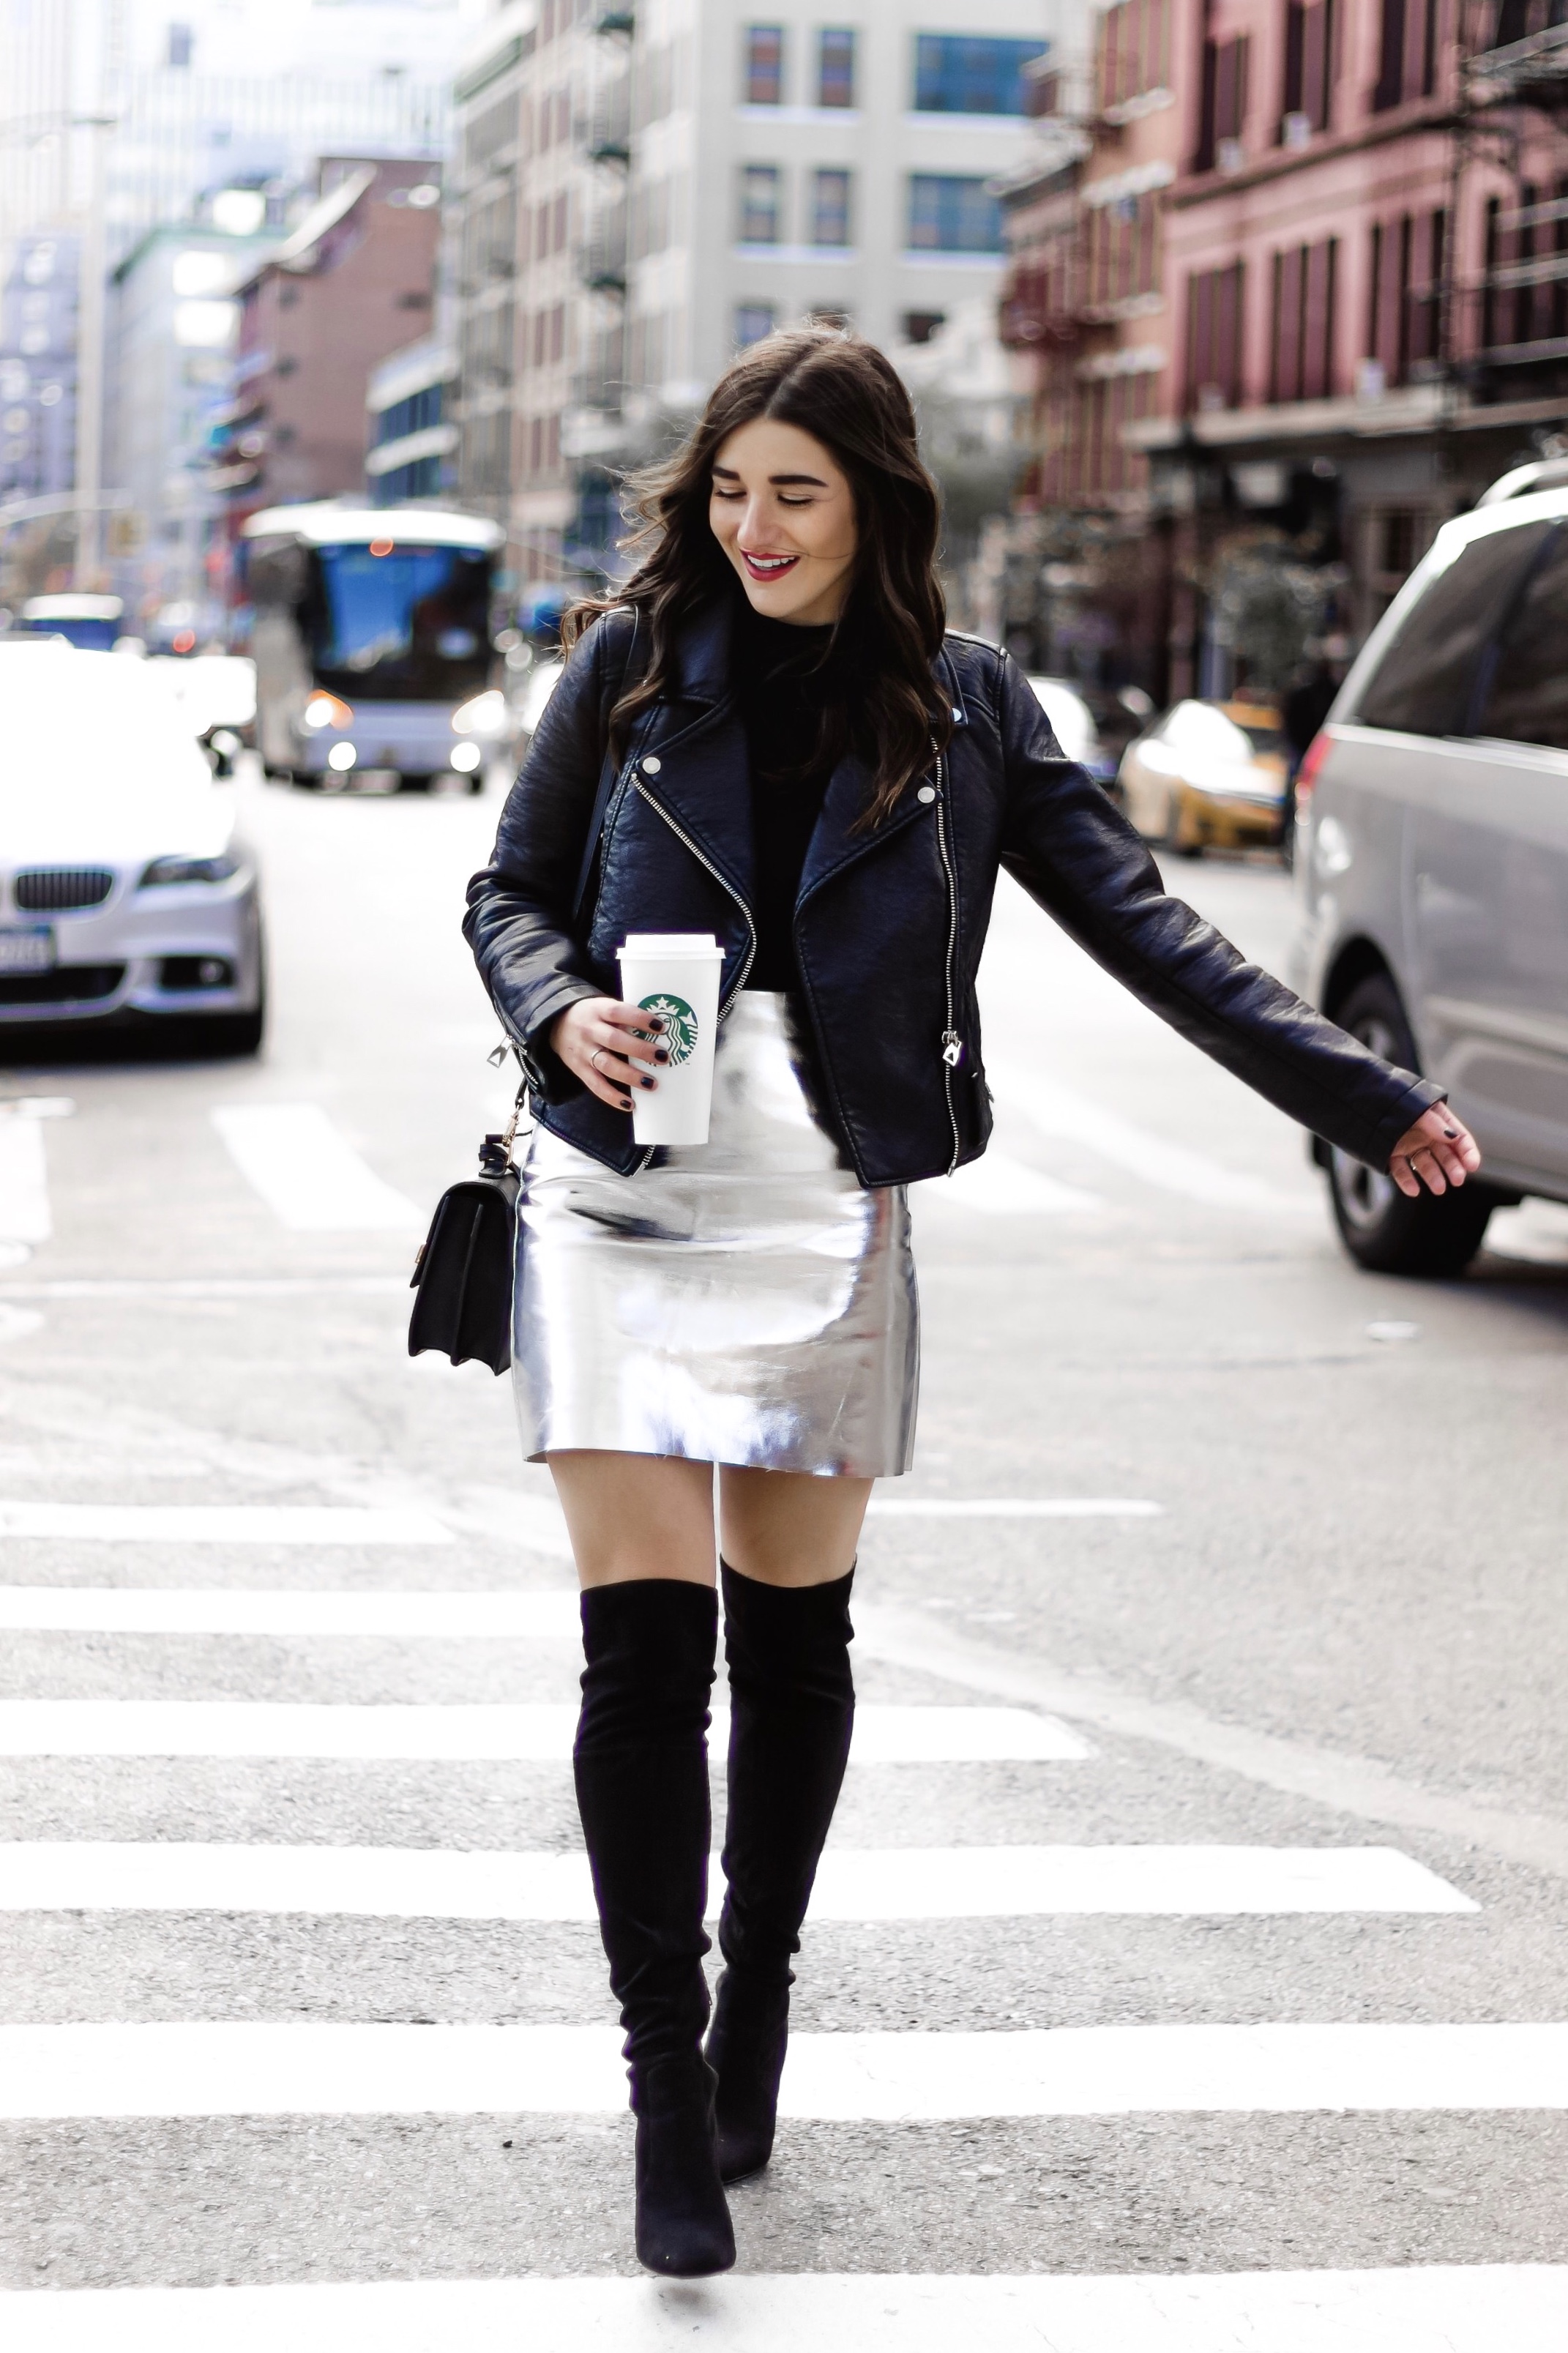 Metallic Mini Skirt  Black Moto Jacket  April 2018 Blogging Goals   Esther Santer